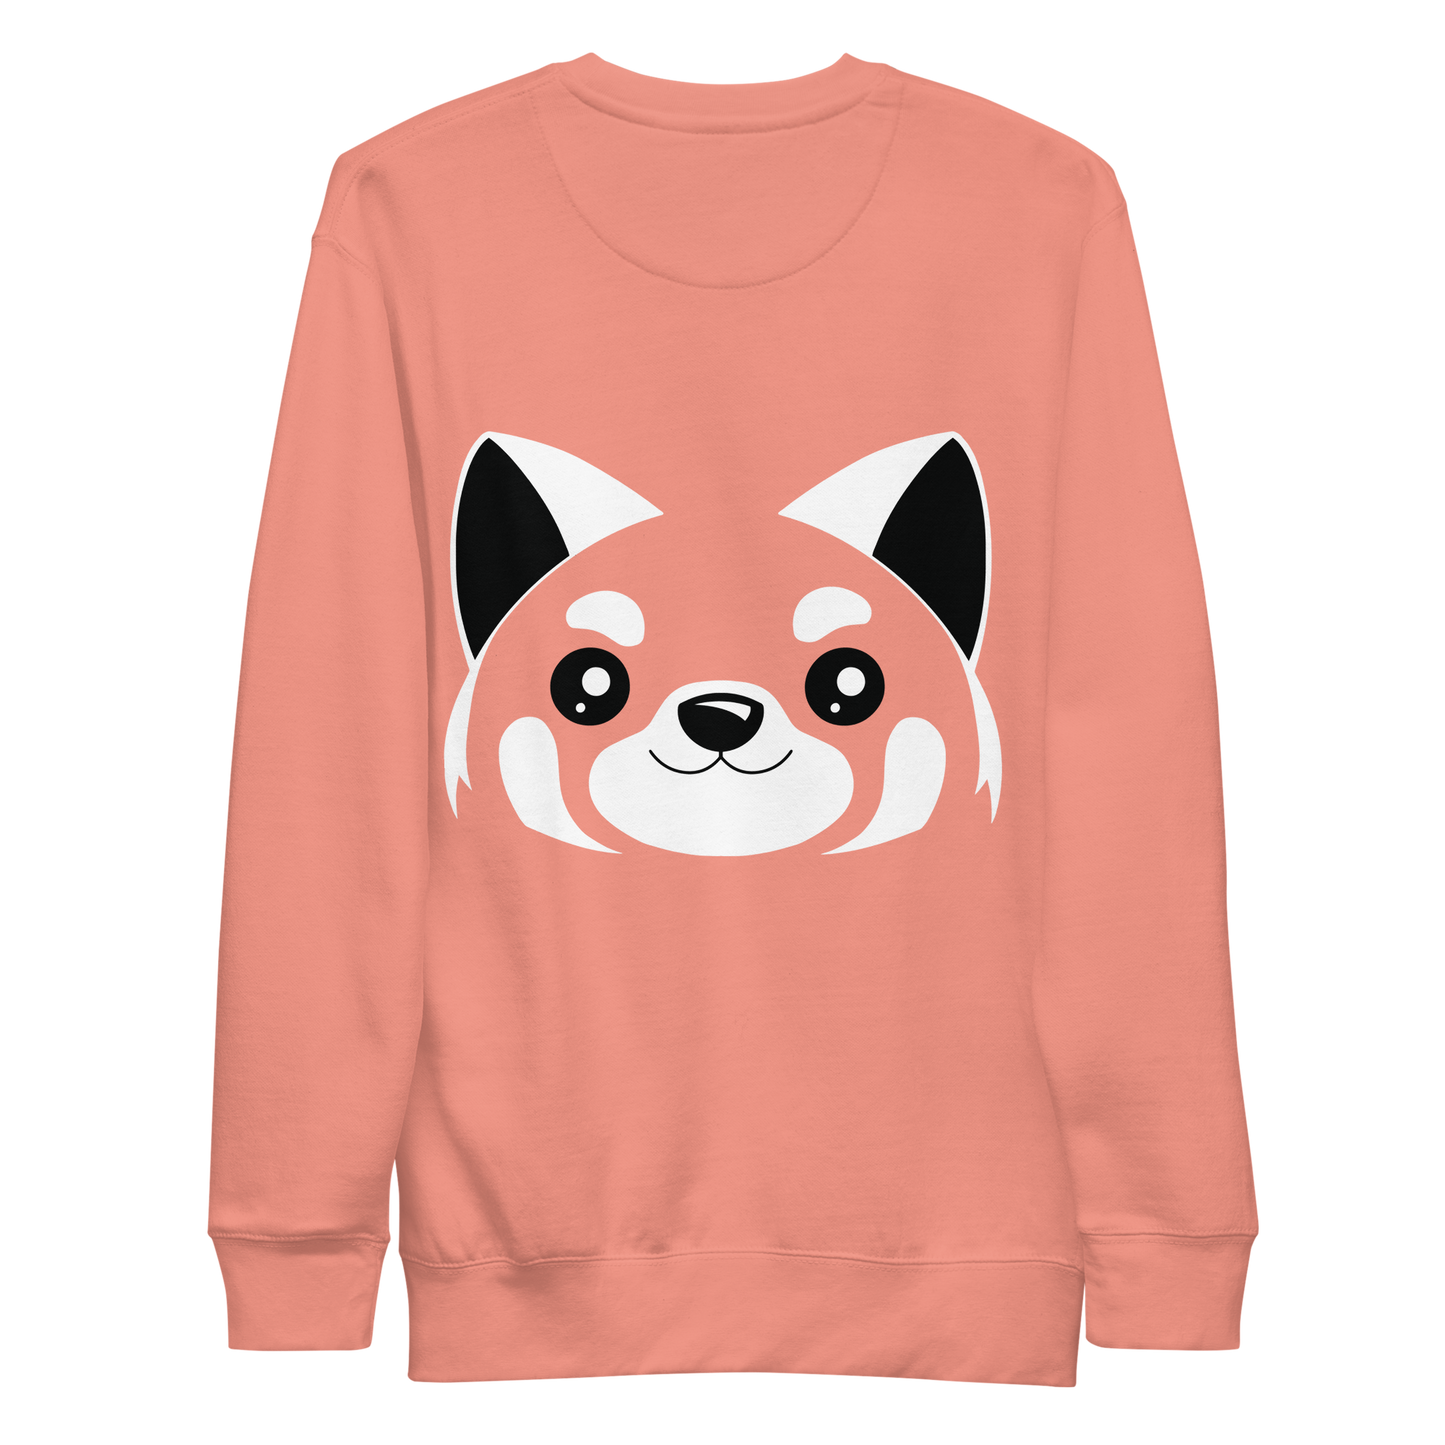 Red panda face | Unisex Premium Sweatshirt - F&B